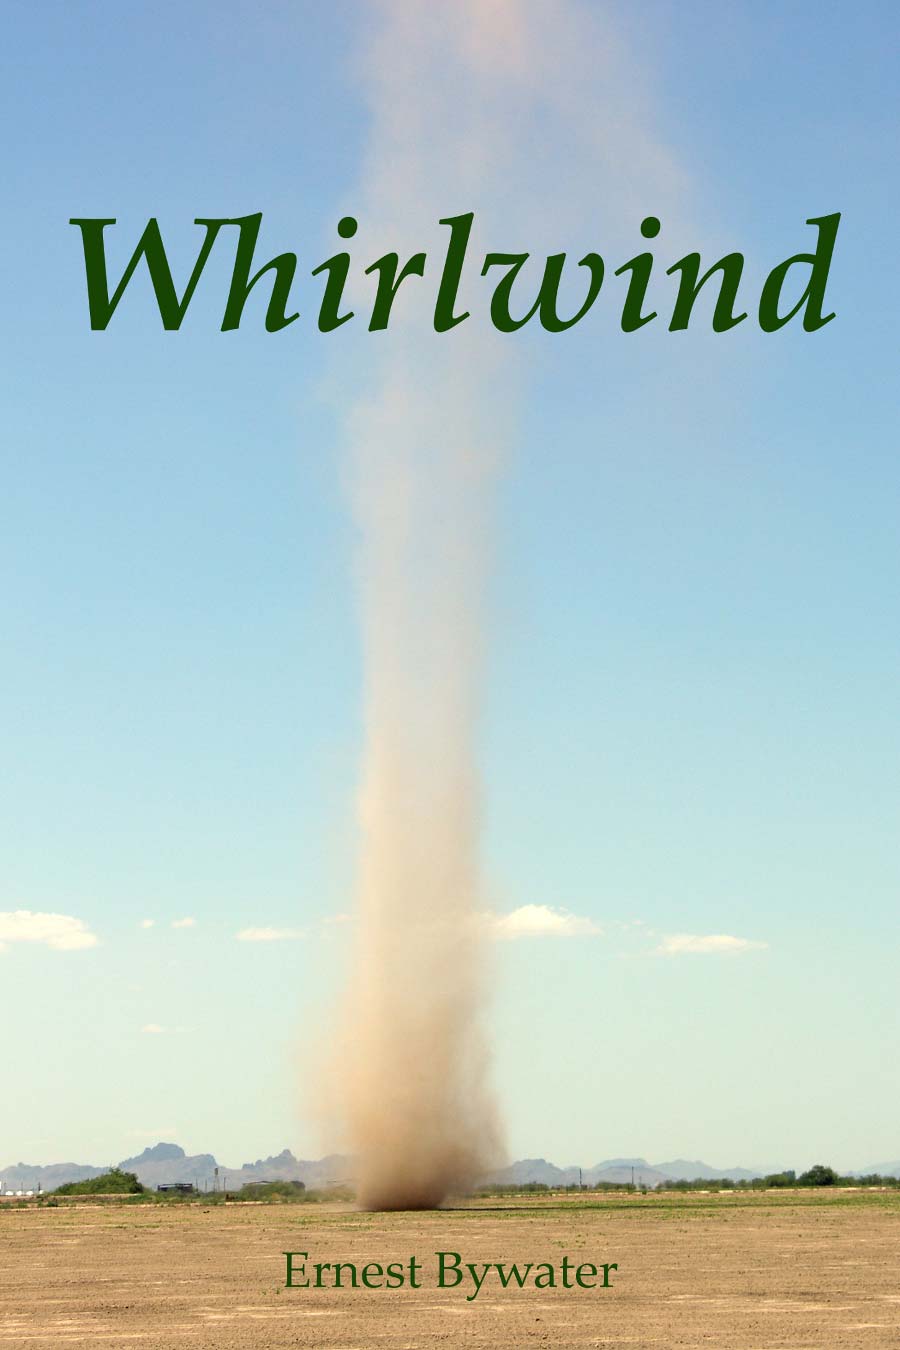 Cover - Image of Tornado Twister